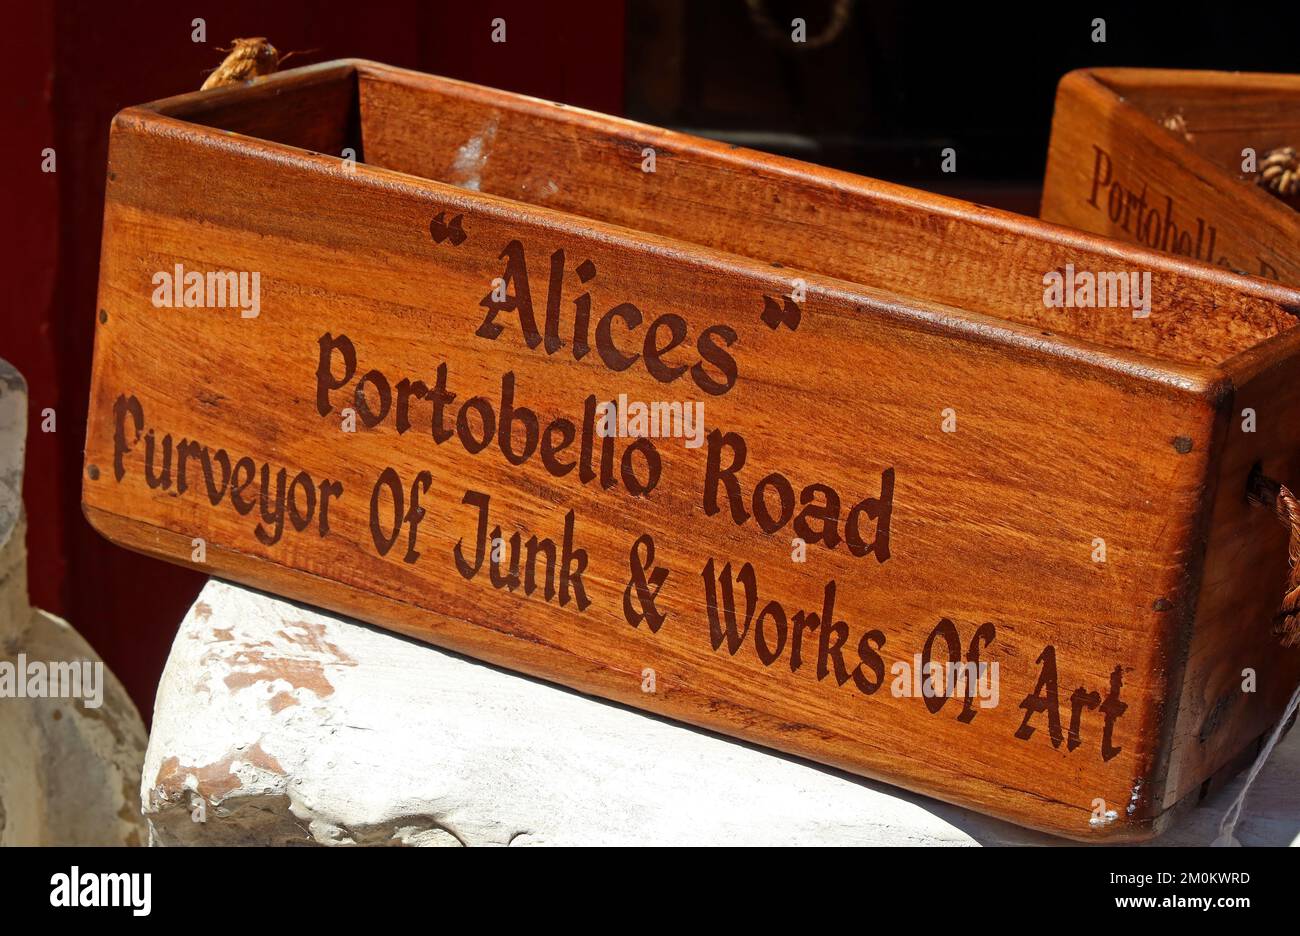 Alices, Portobello Road, Purveyor Of Junk & Works of Art, 86 Portobello Rd, London W11 2QD Stock Photo